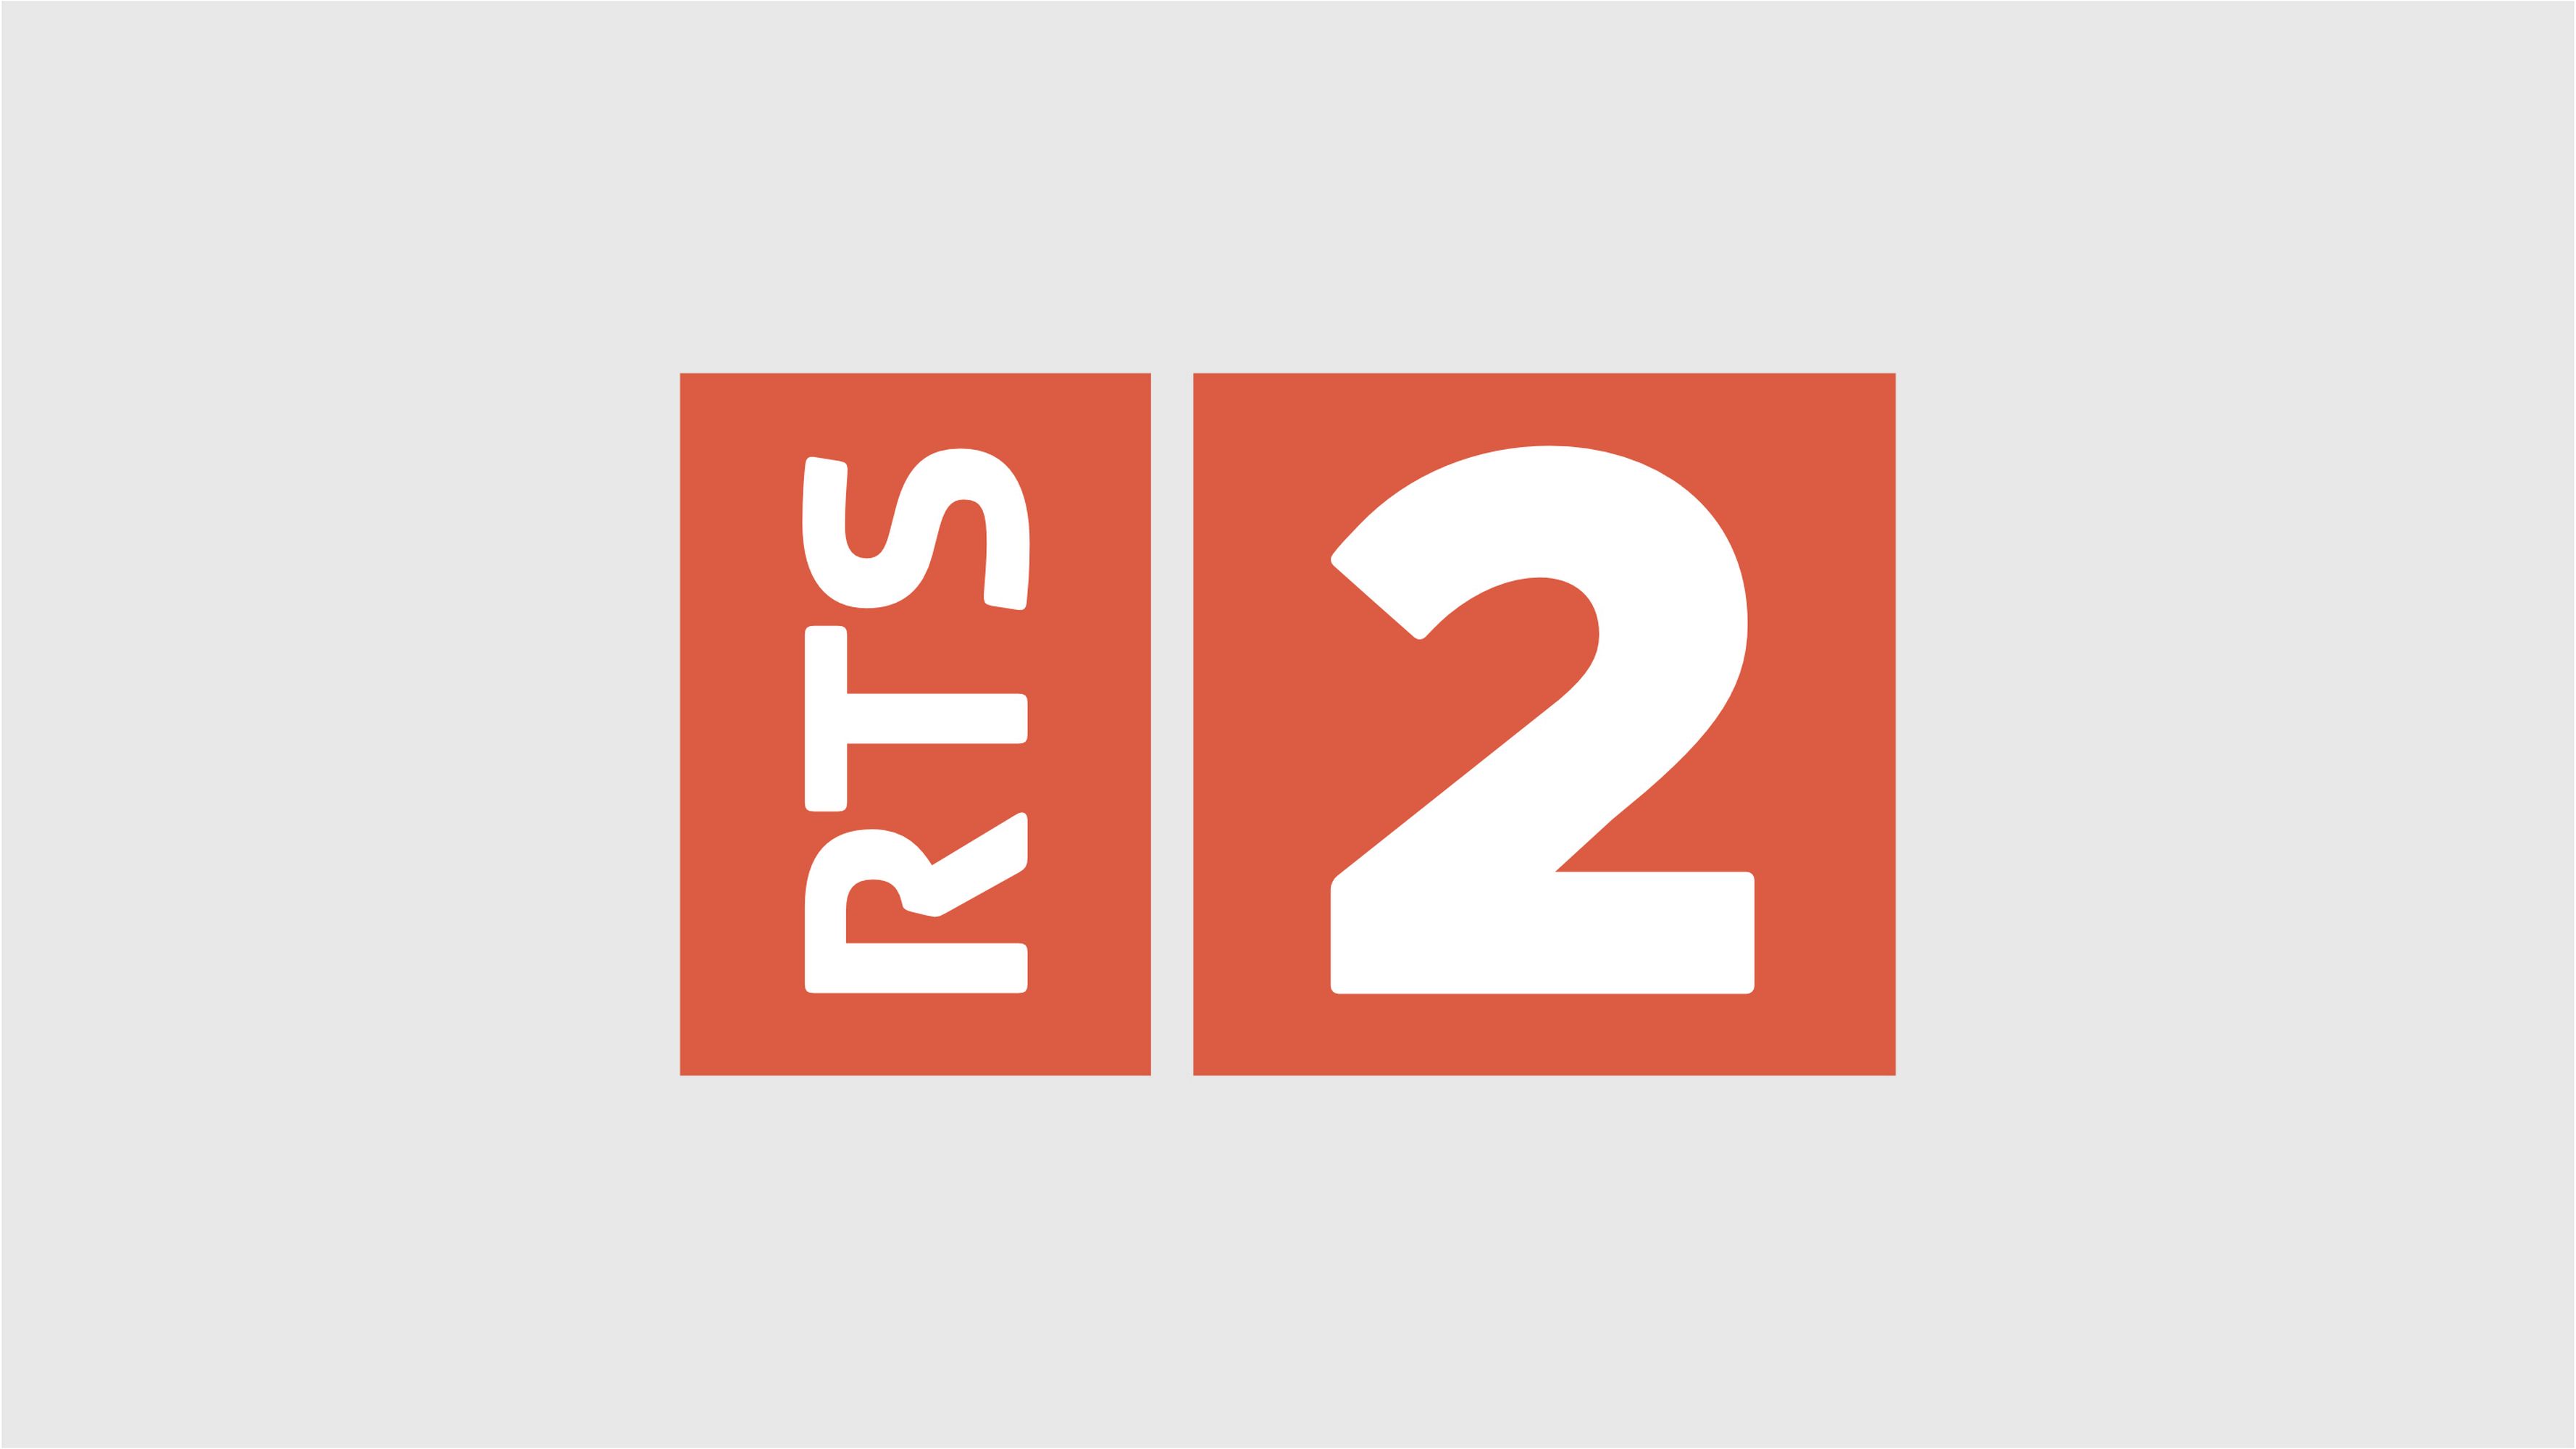 РТС логотип. РТС 2013 логотип. SRG логотип. РТС 2 logo Wiki.